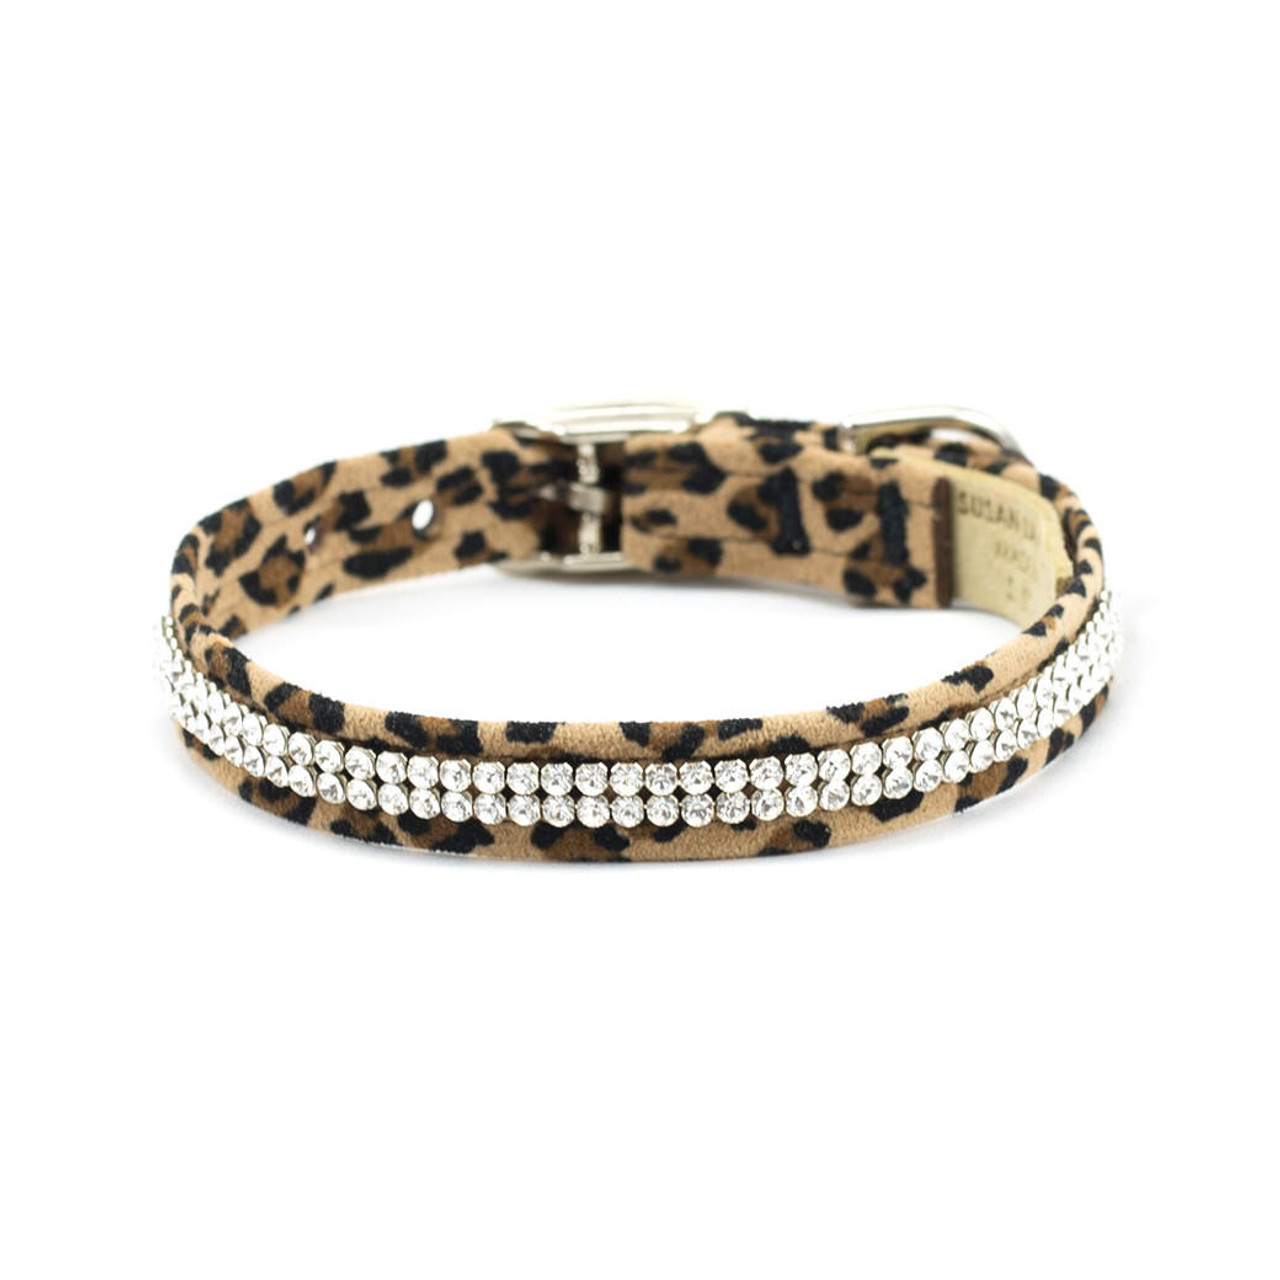  Susan Lanci 2 Row Cheetah Couture Giltmore Collar 